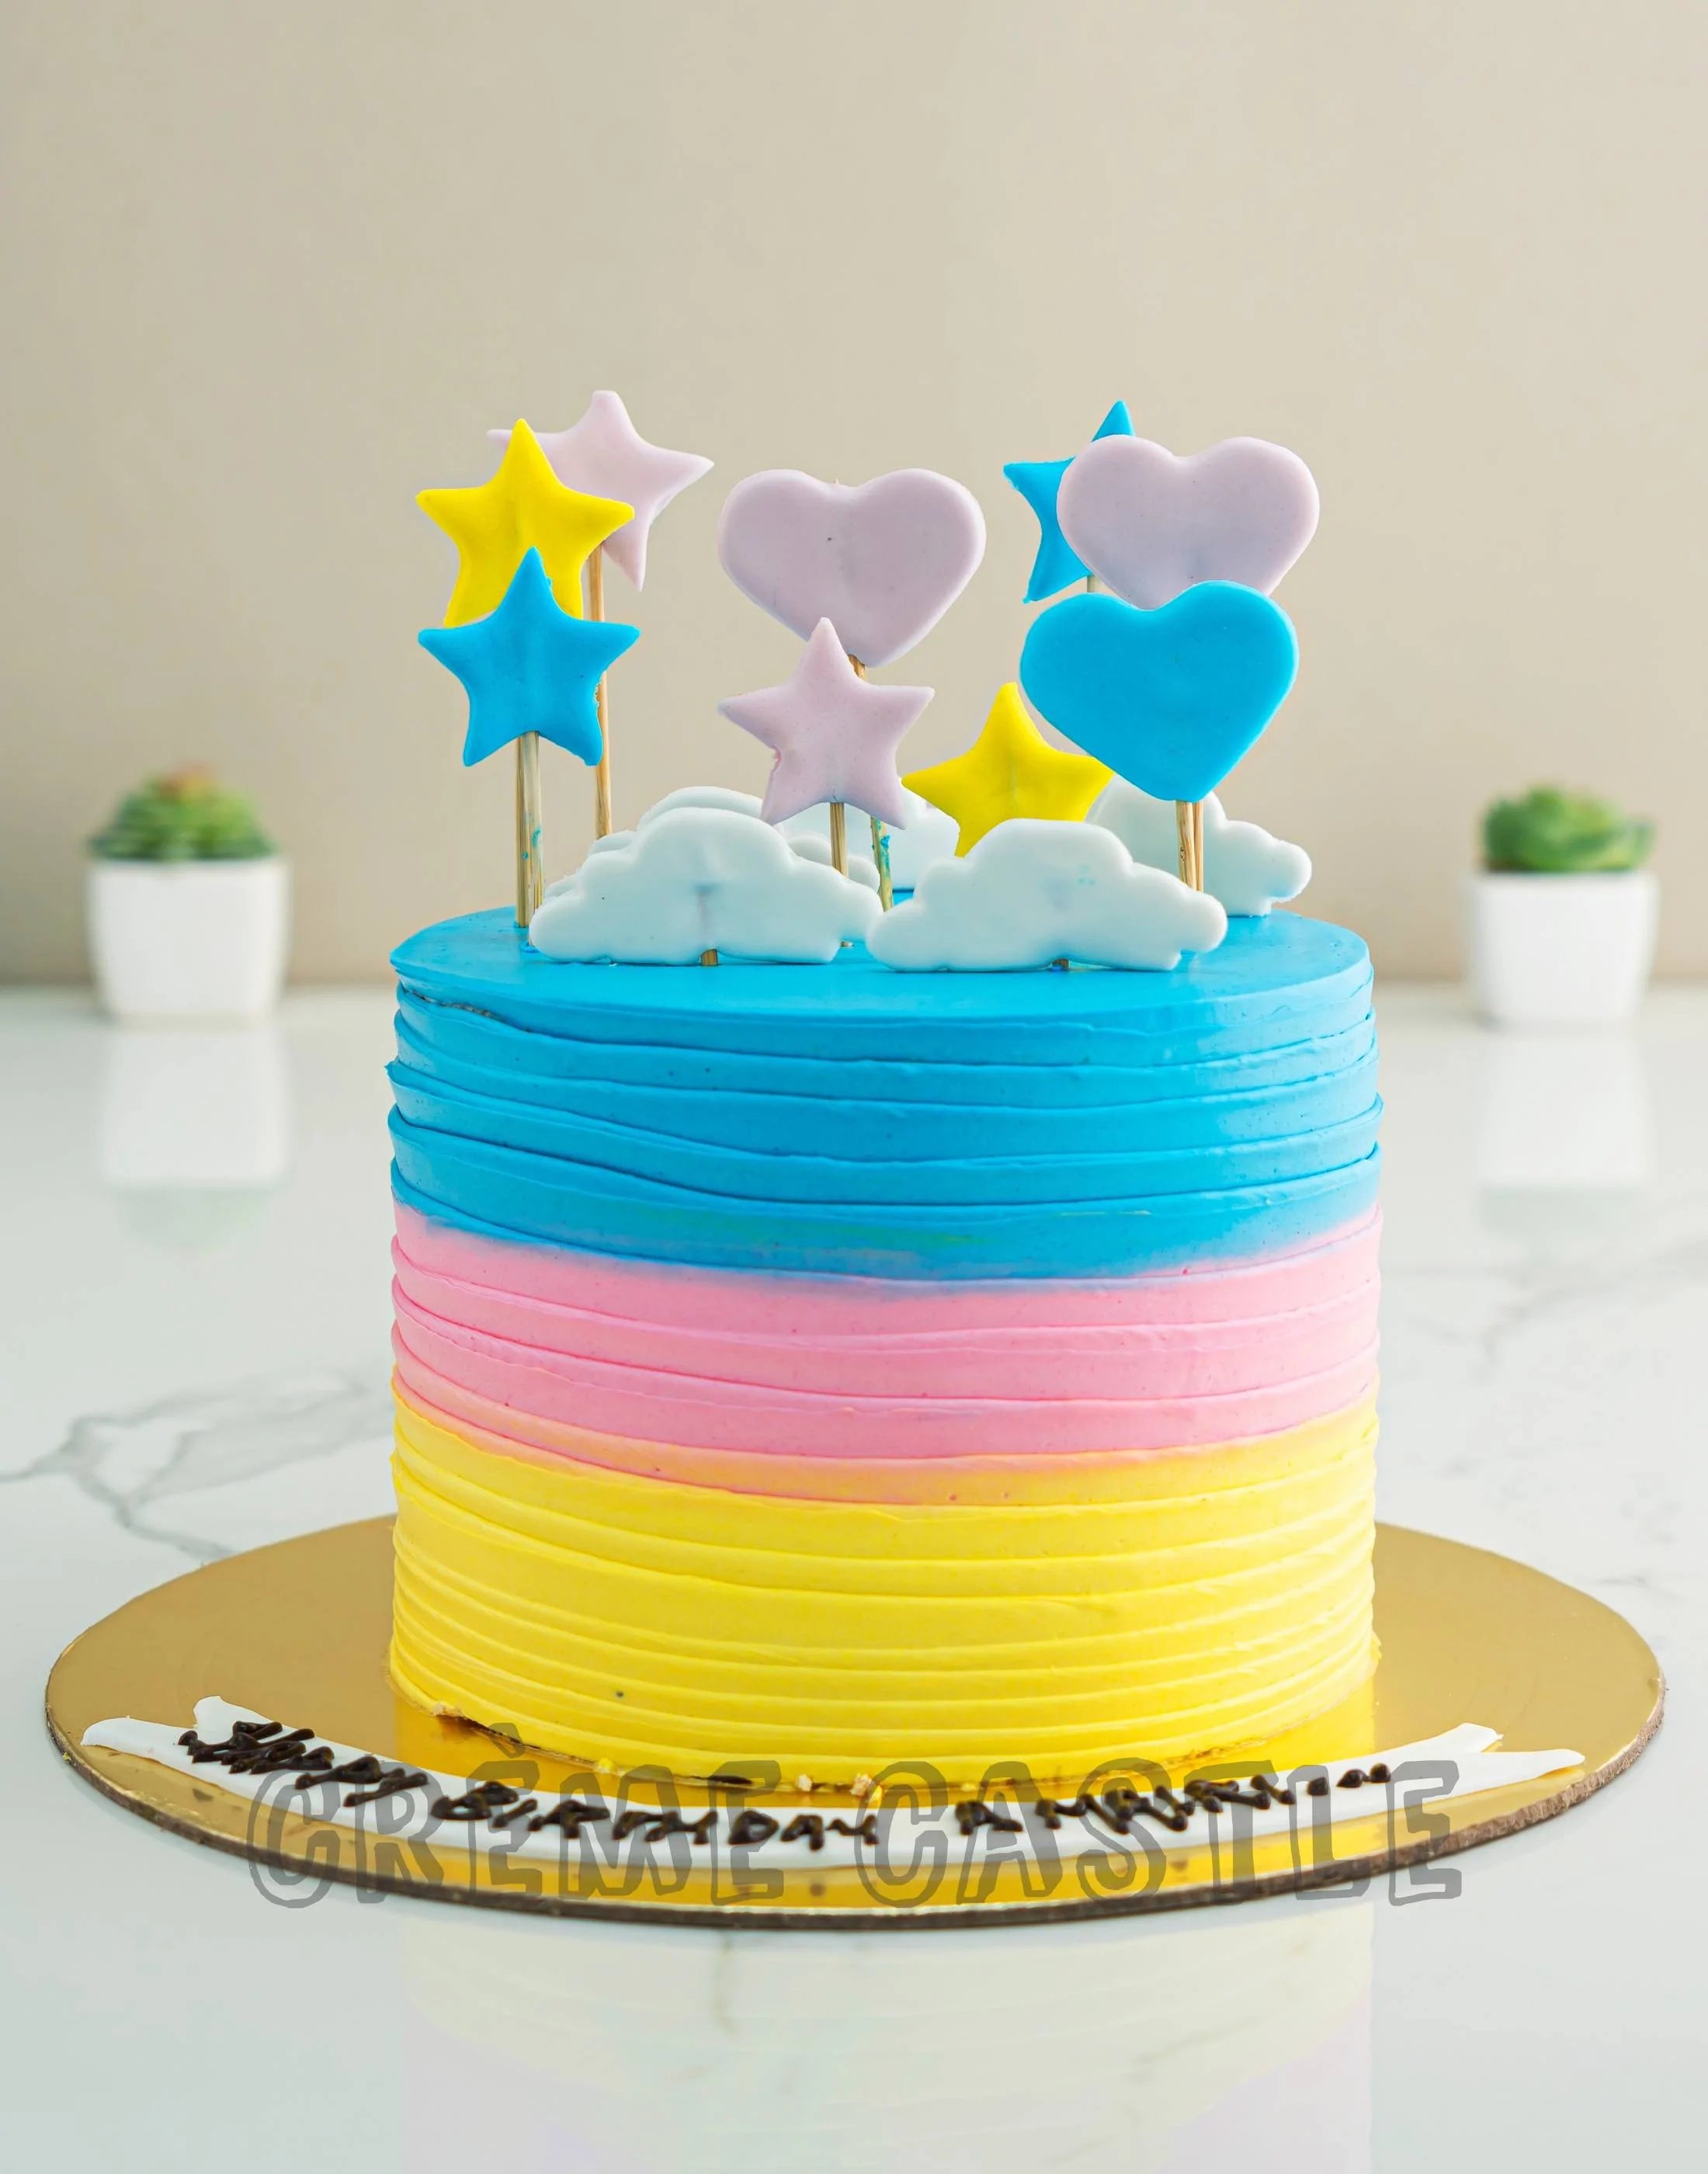 How To Make Rainbow Cake Decorating Ideas | So Yummy Cake Recipe for Your  Birthday | Tasty Cakes - YouTube